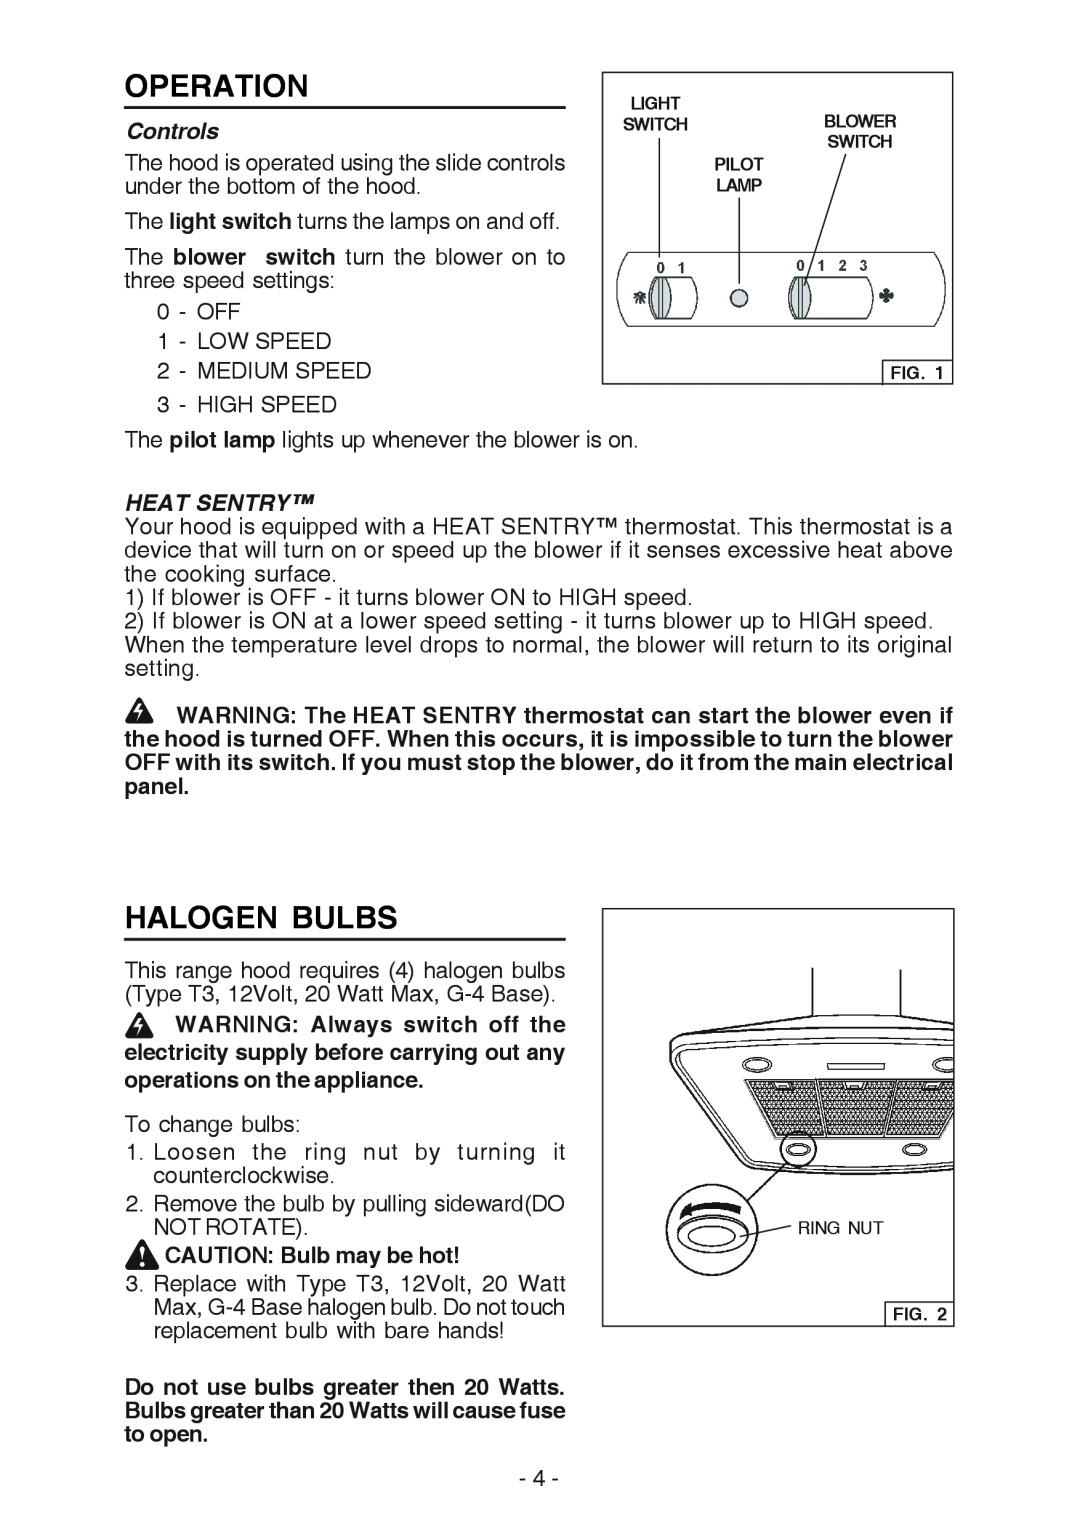 Broan E54000 manual Operation, Halogen Bulbs, Controls, Heat Sentry 